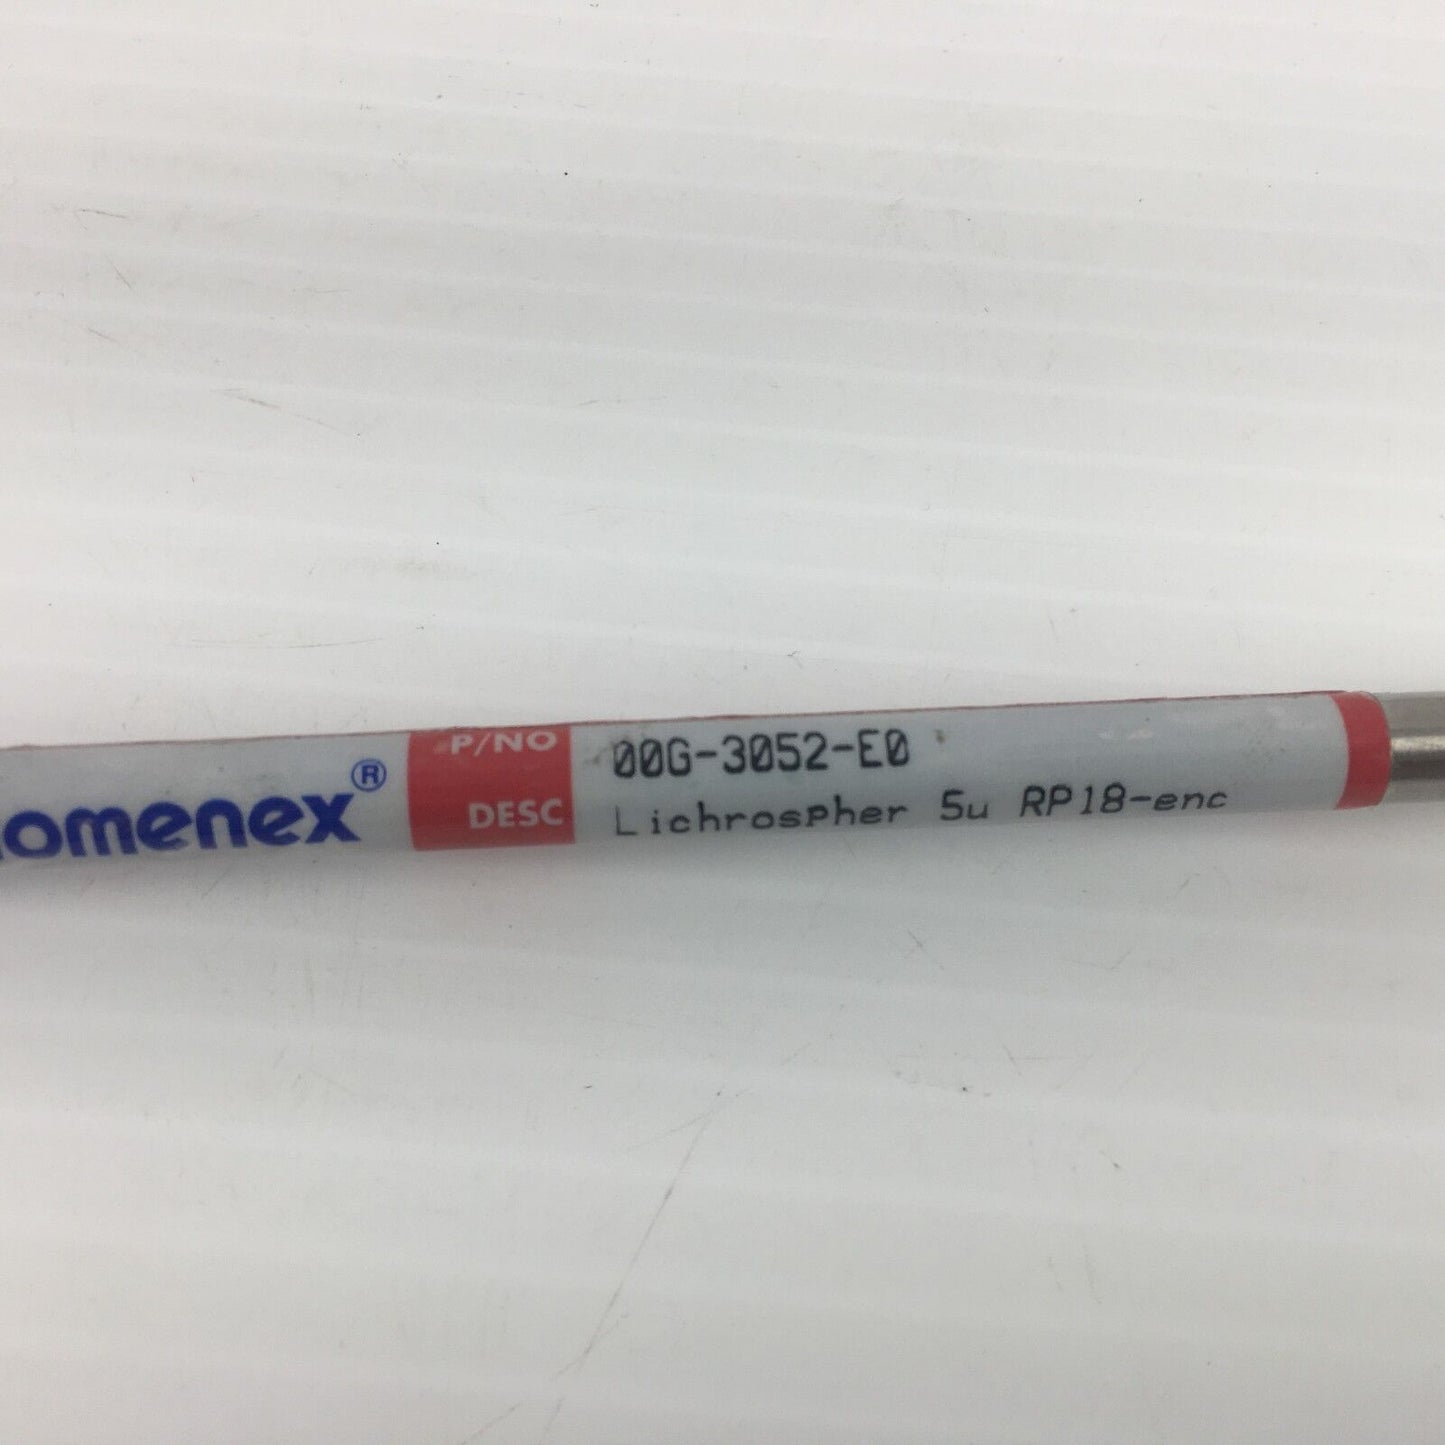 Phenomenex 00G-3052-E0 Lichrosphere 5 RP18-enc 250 x 4.60 mm 5 micron